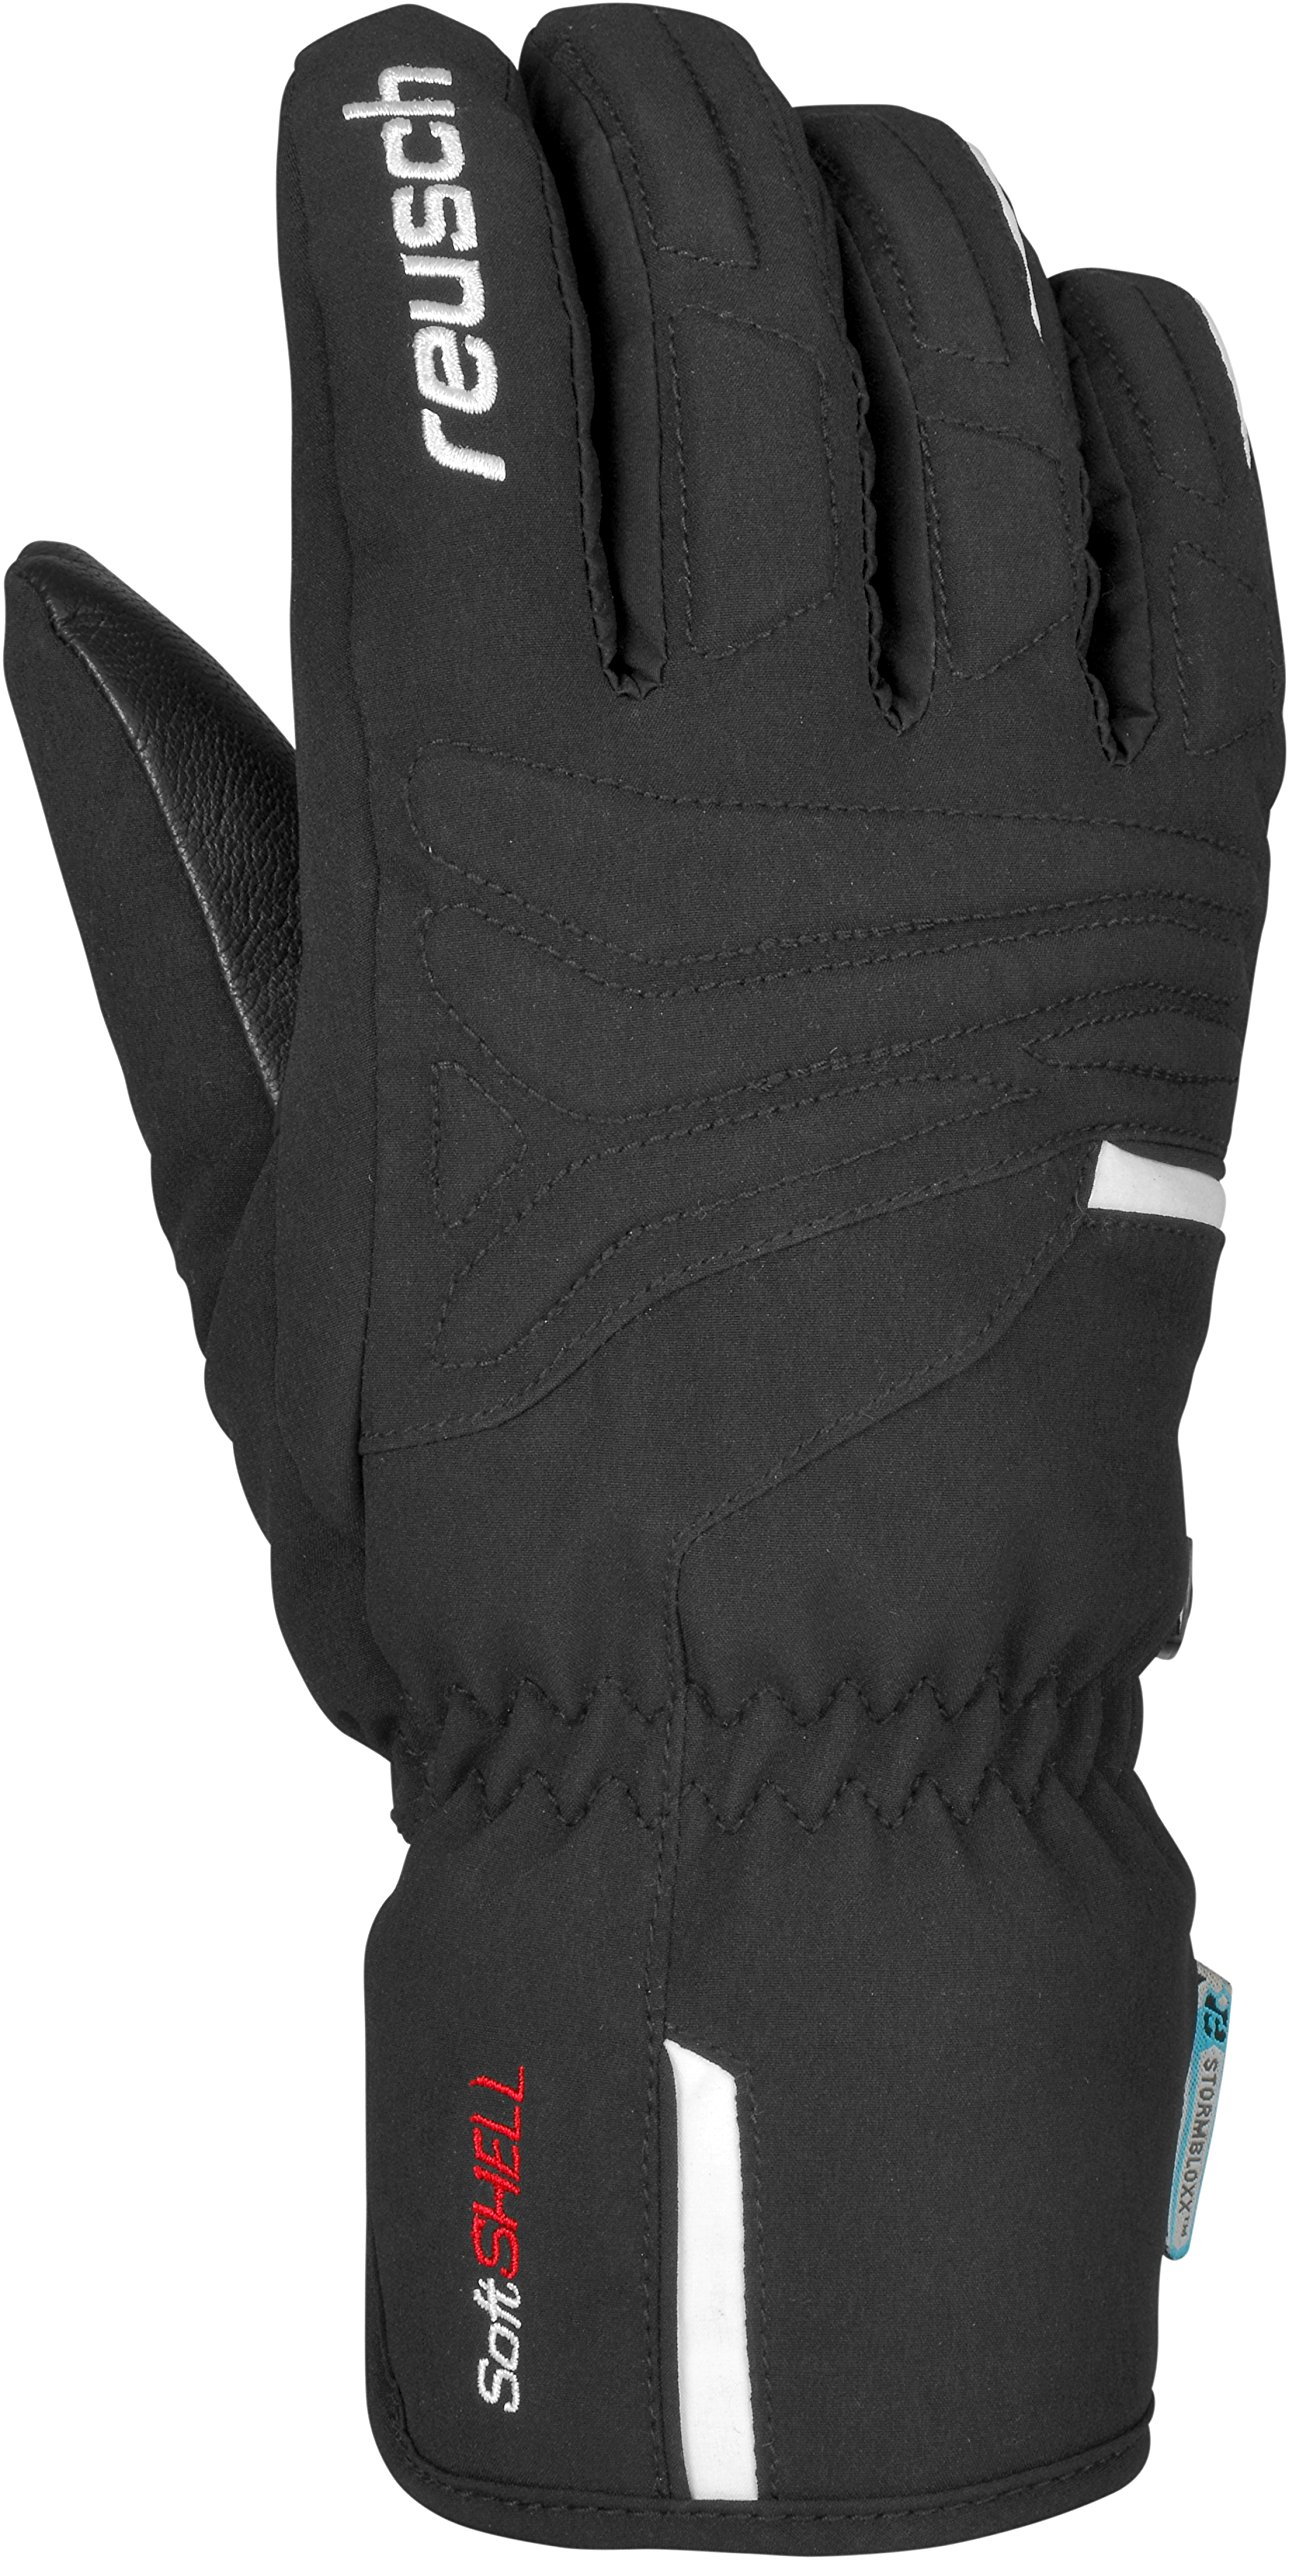 Reusch Herren Sirius STORMBLOXX Handschuhe, Black/White, 9.5